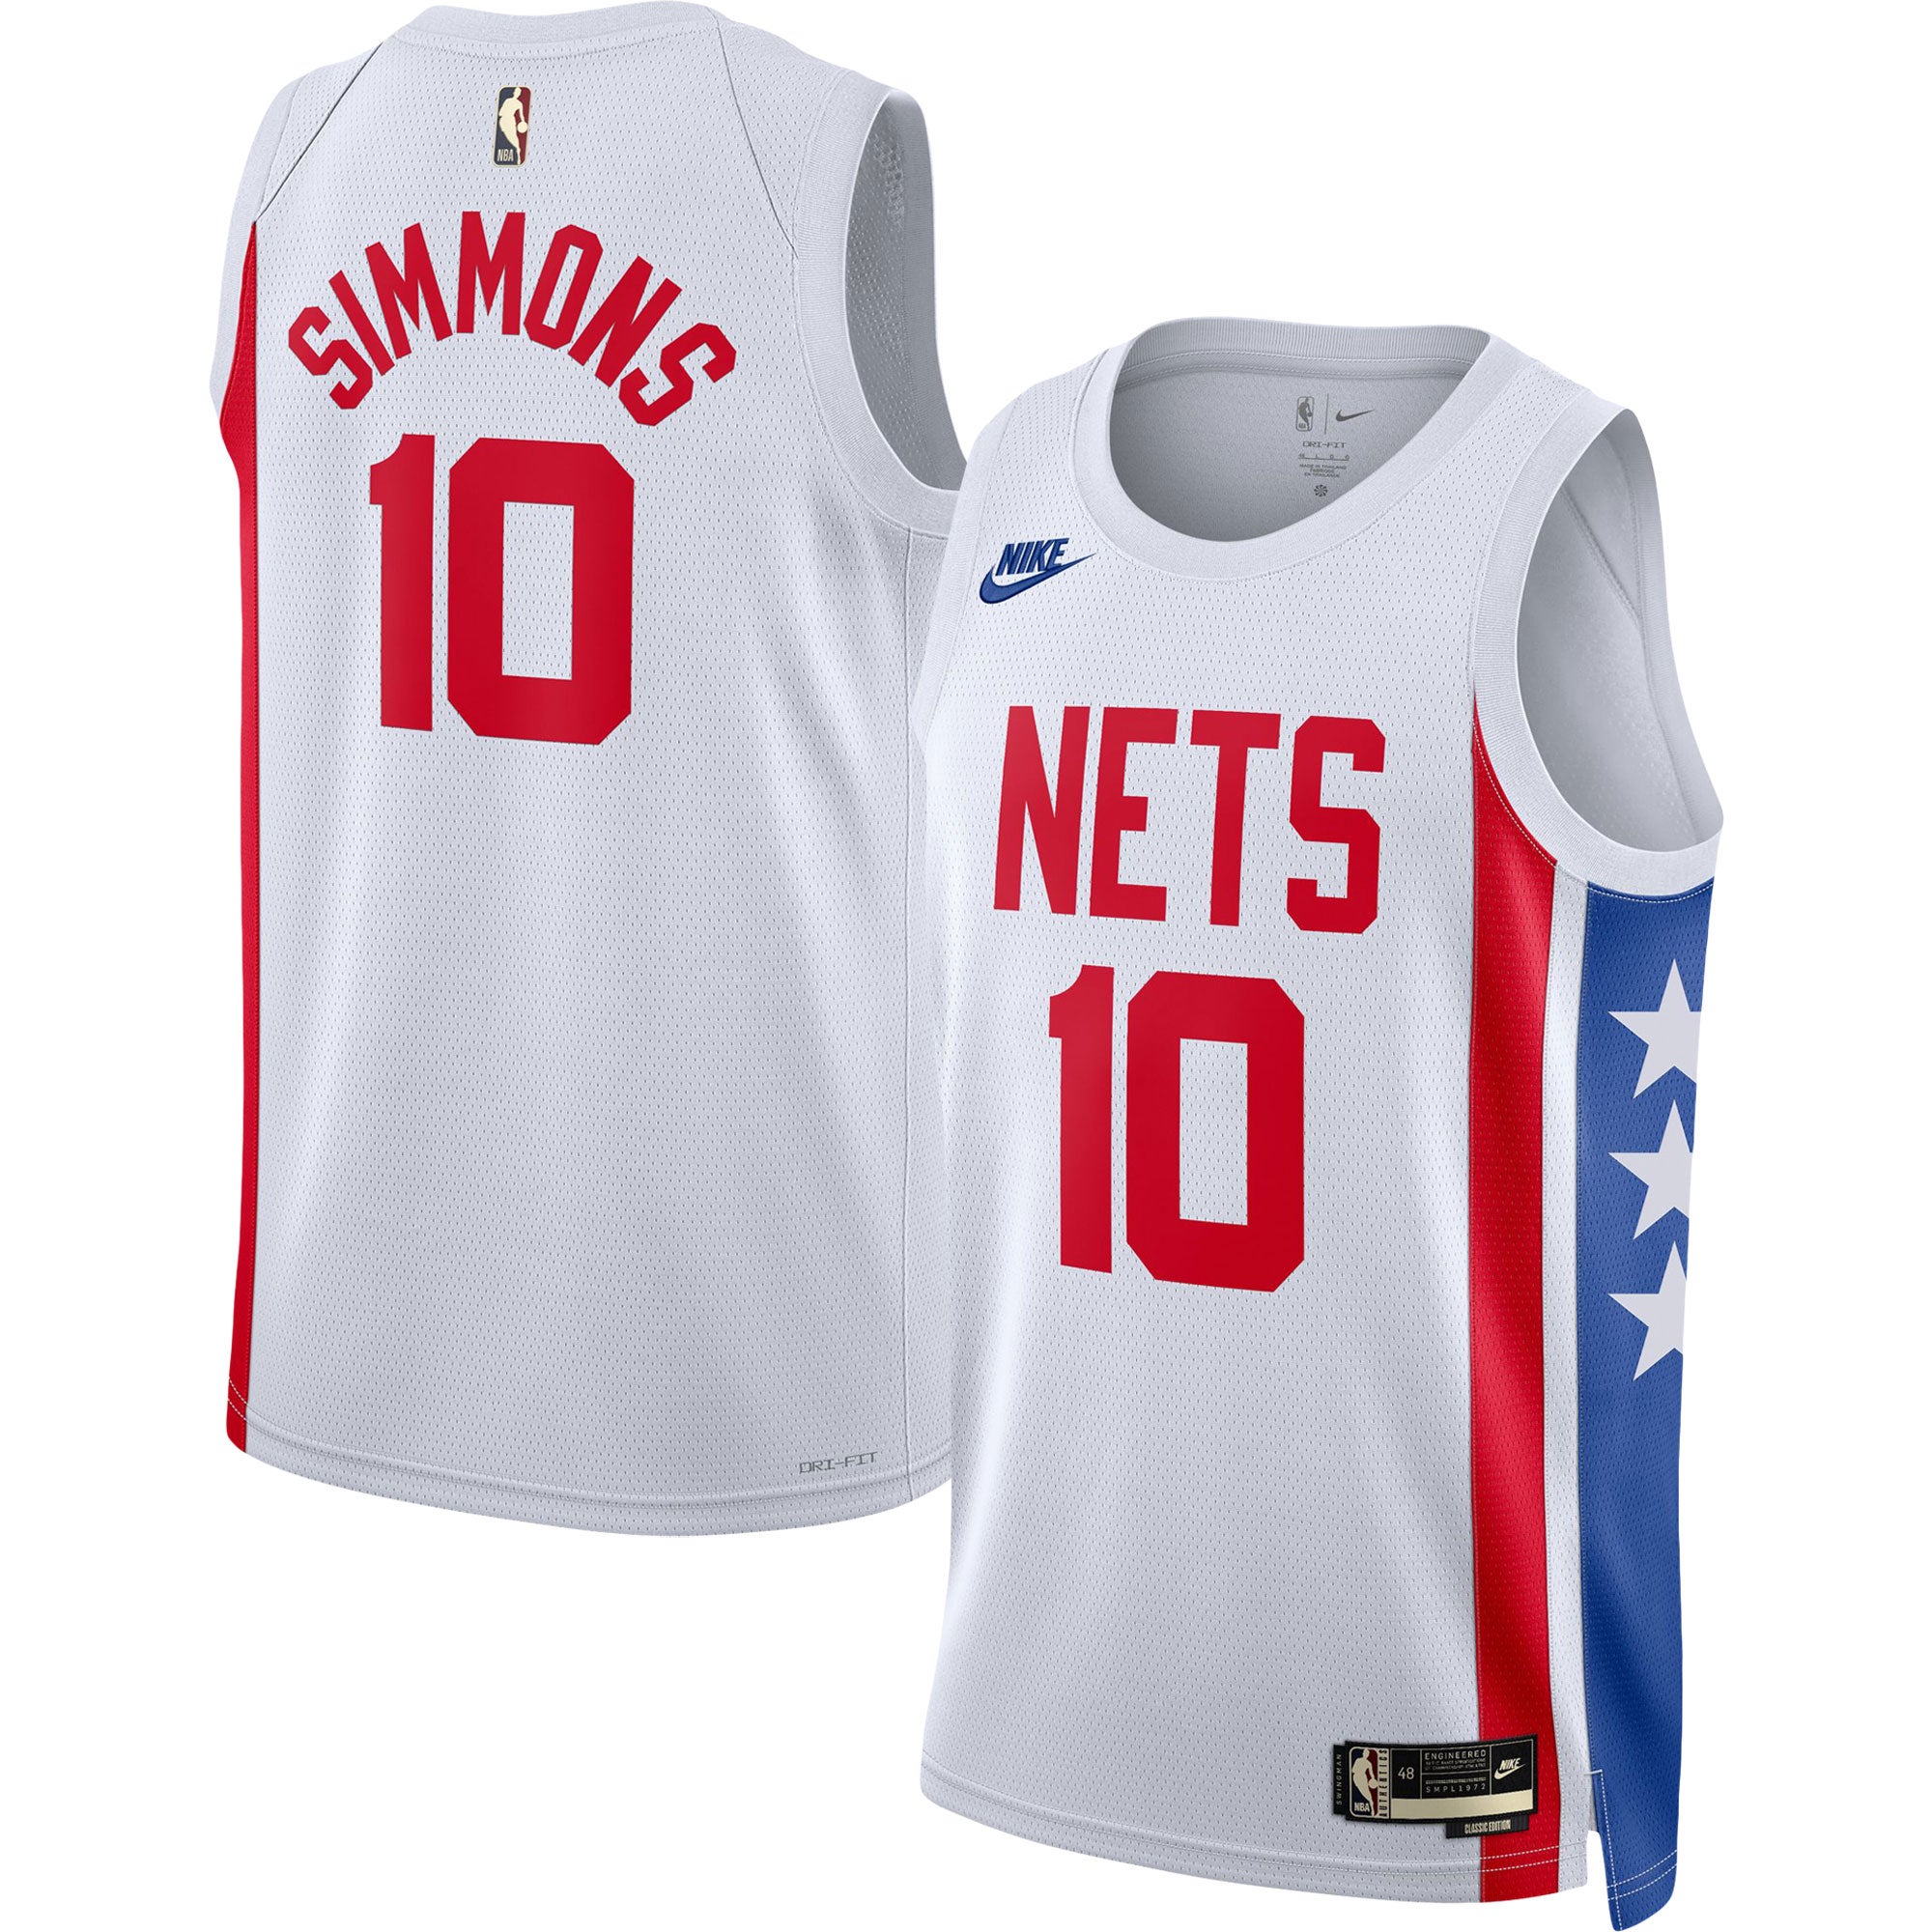 Nike Nets Swingman Jersey Classic Edition